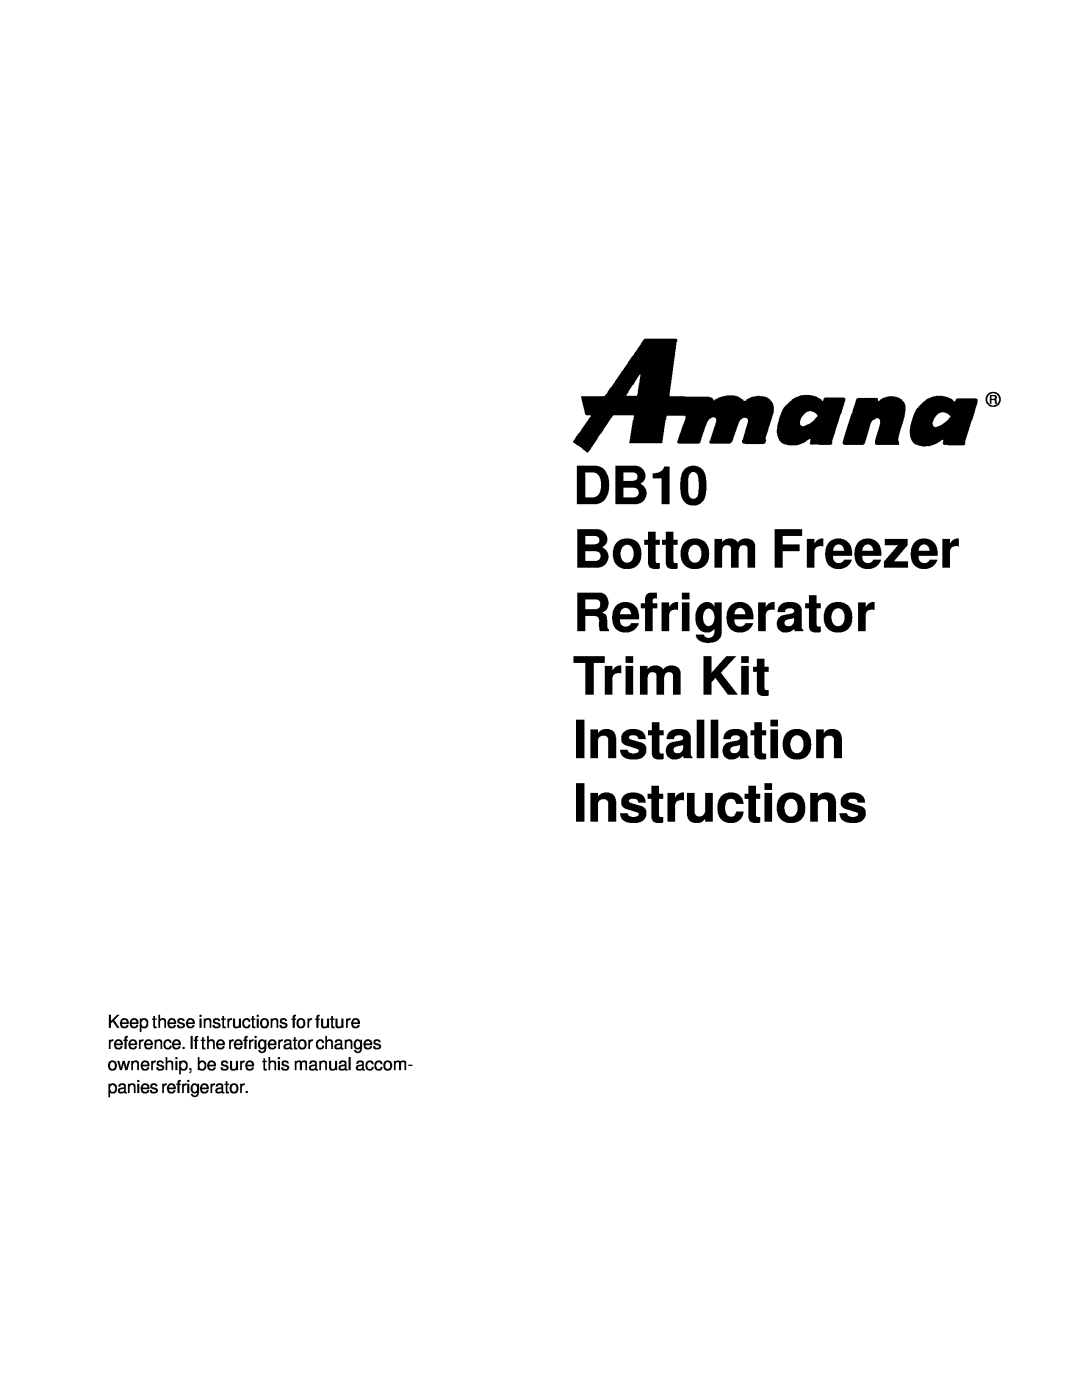 Maytag installation instructions DB10 Bottom Freezer Refrigerator Trim Kit, Installation Instructions 